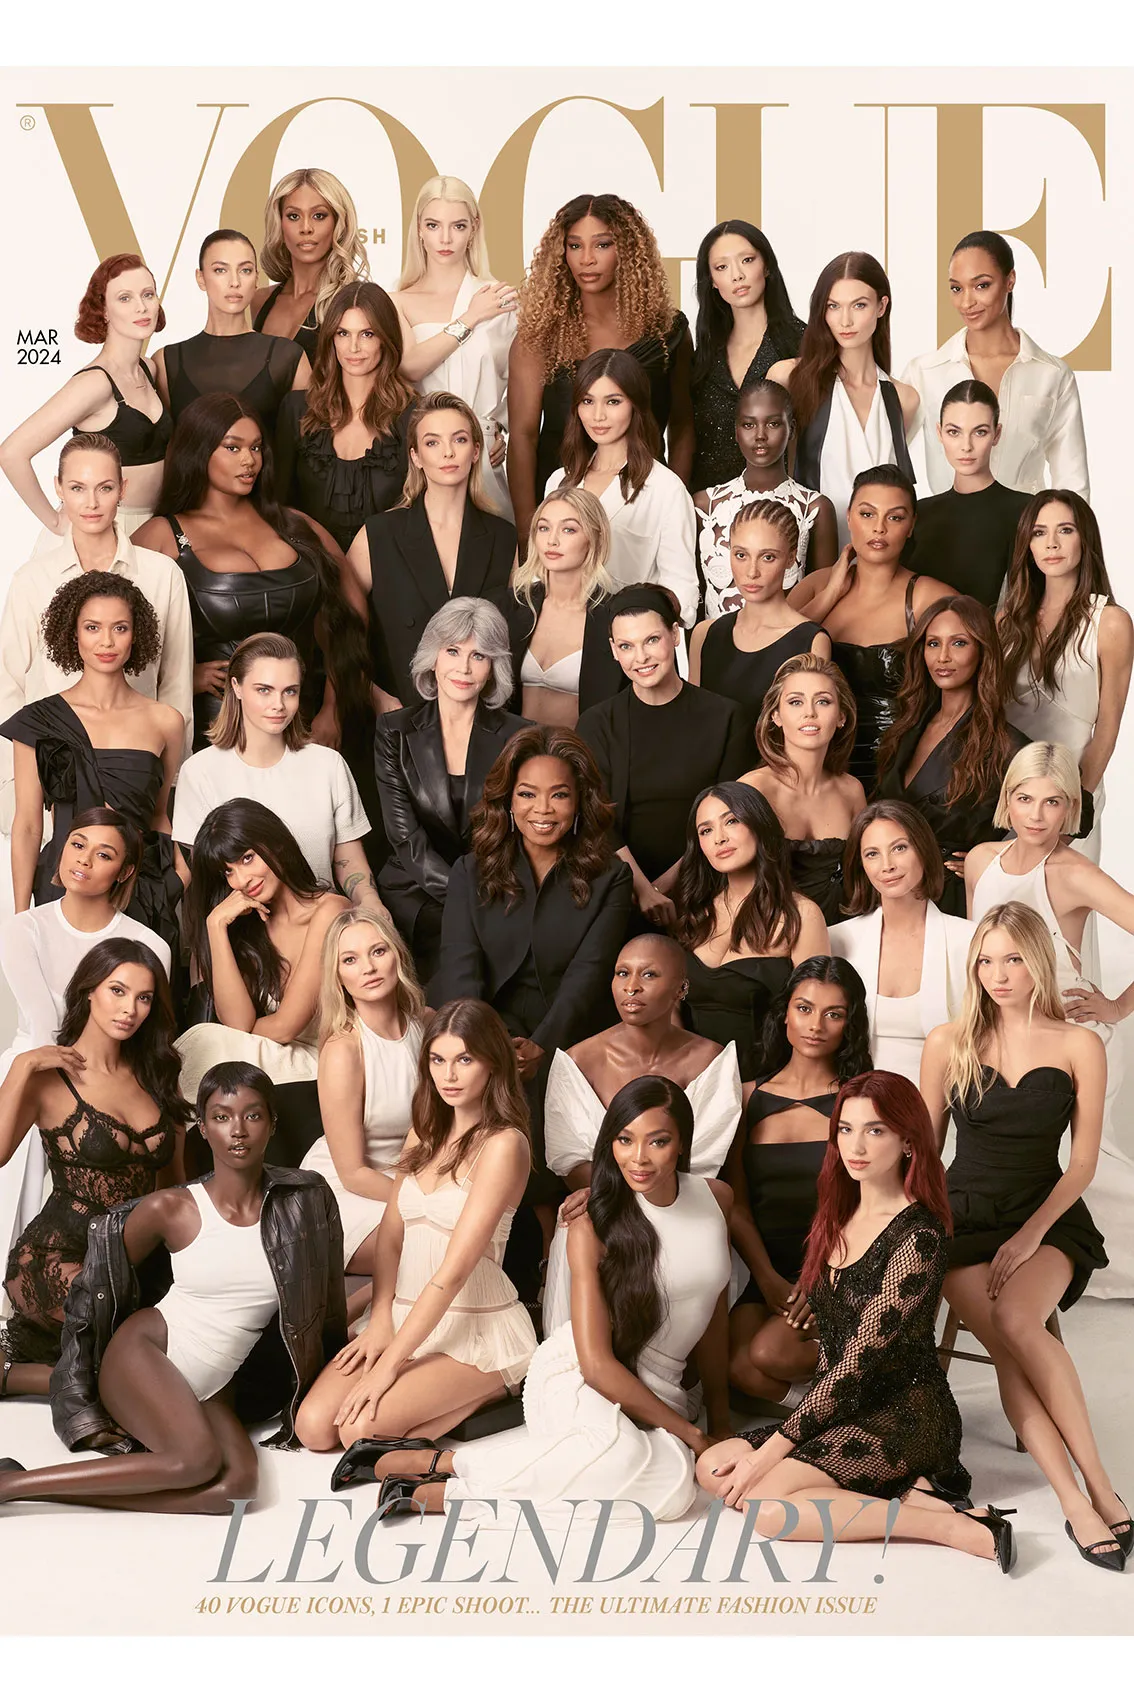 Cover vol iconische vrouwen: Britse Vogue pakt uit